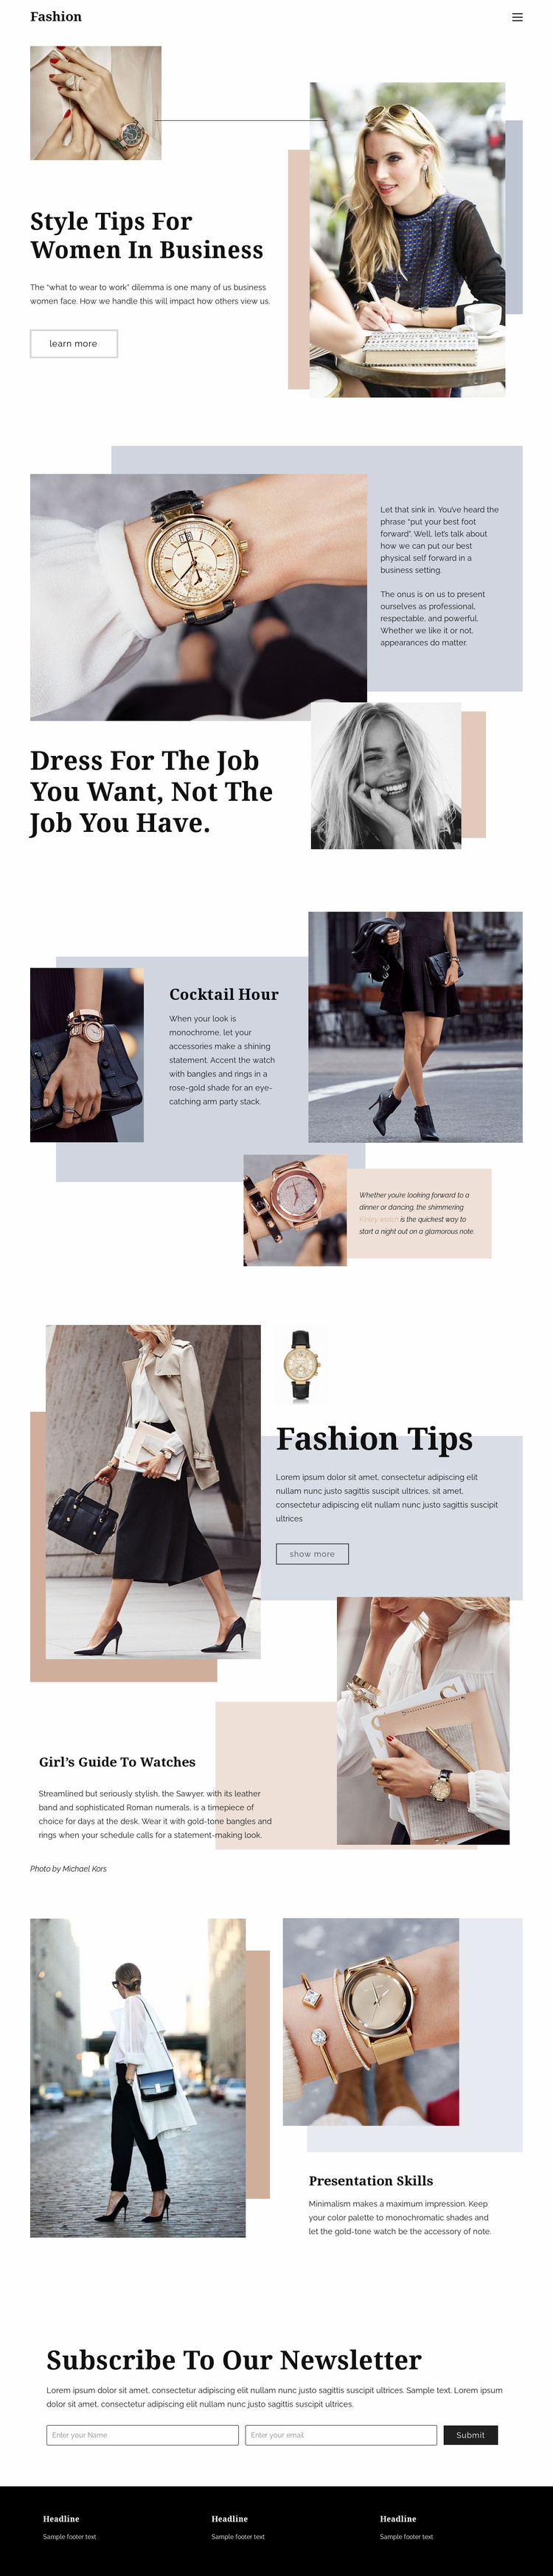 Fashion tips Landing Page